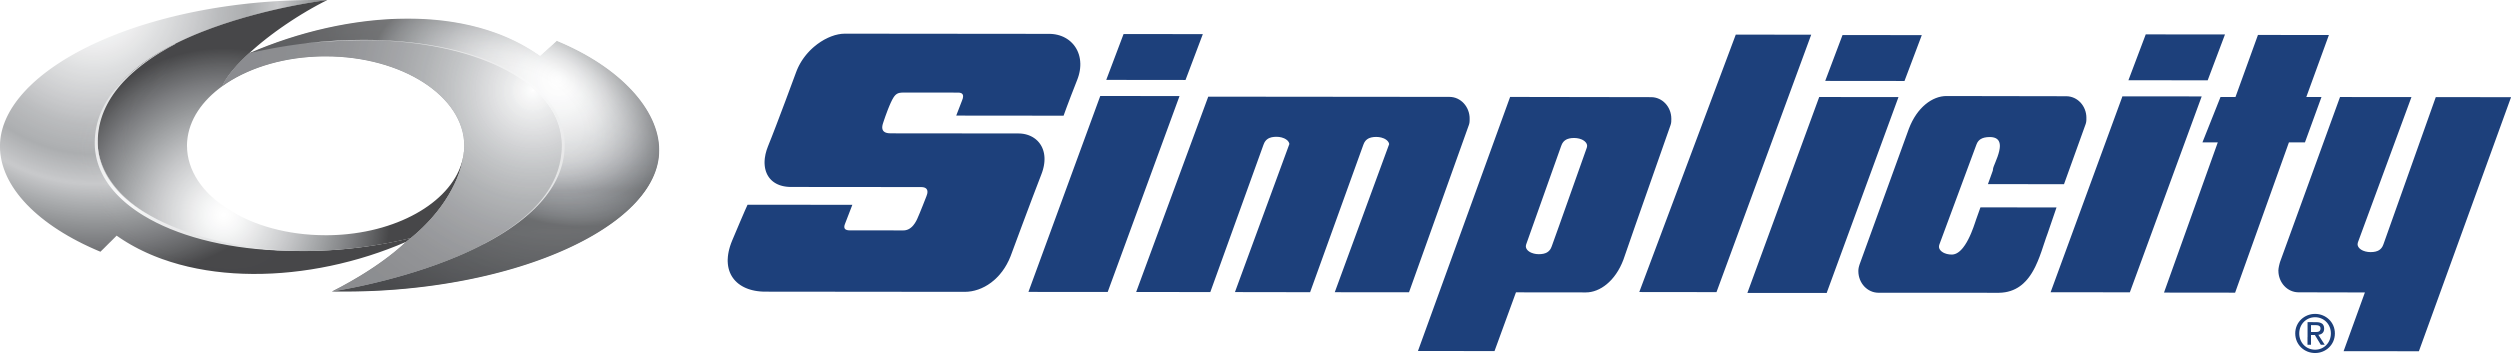 Stone's Farm Service, Inc. Logo